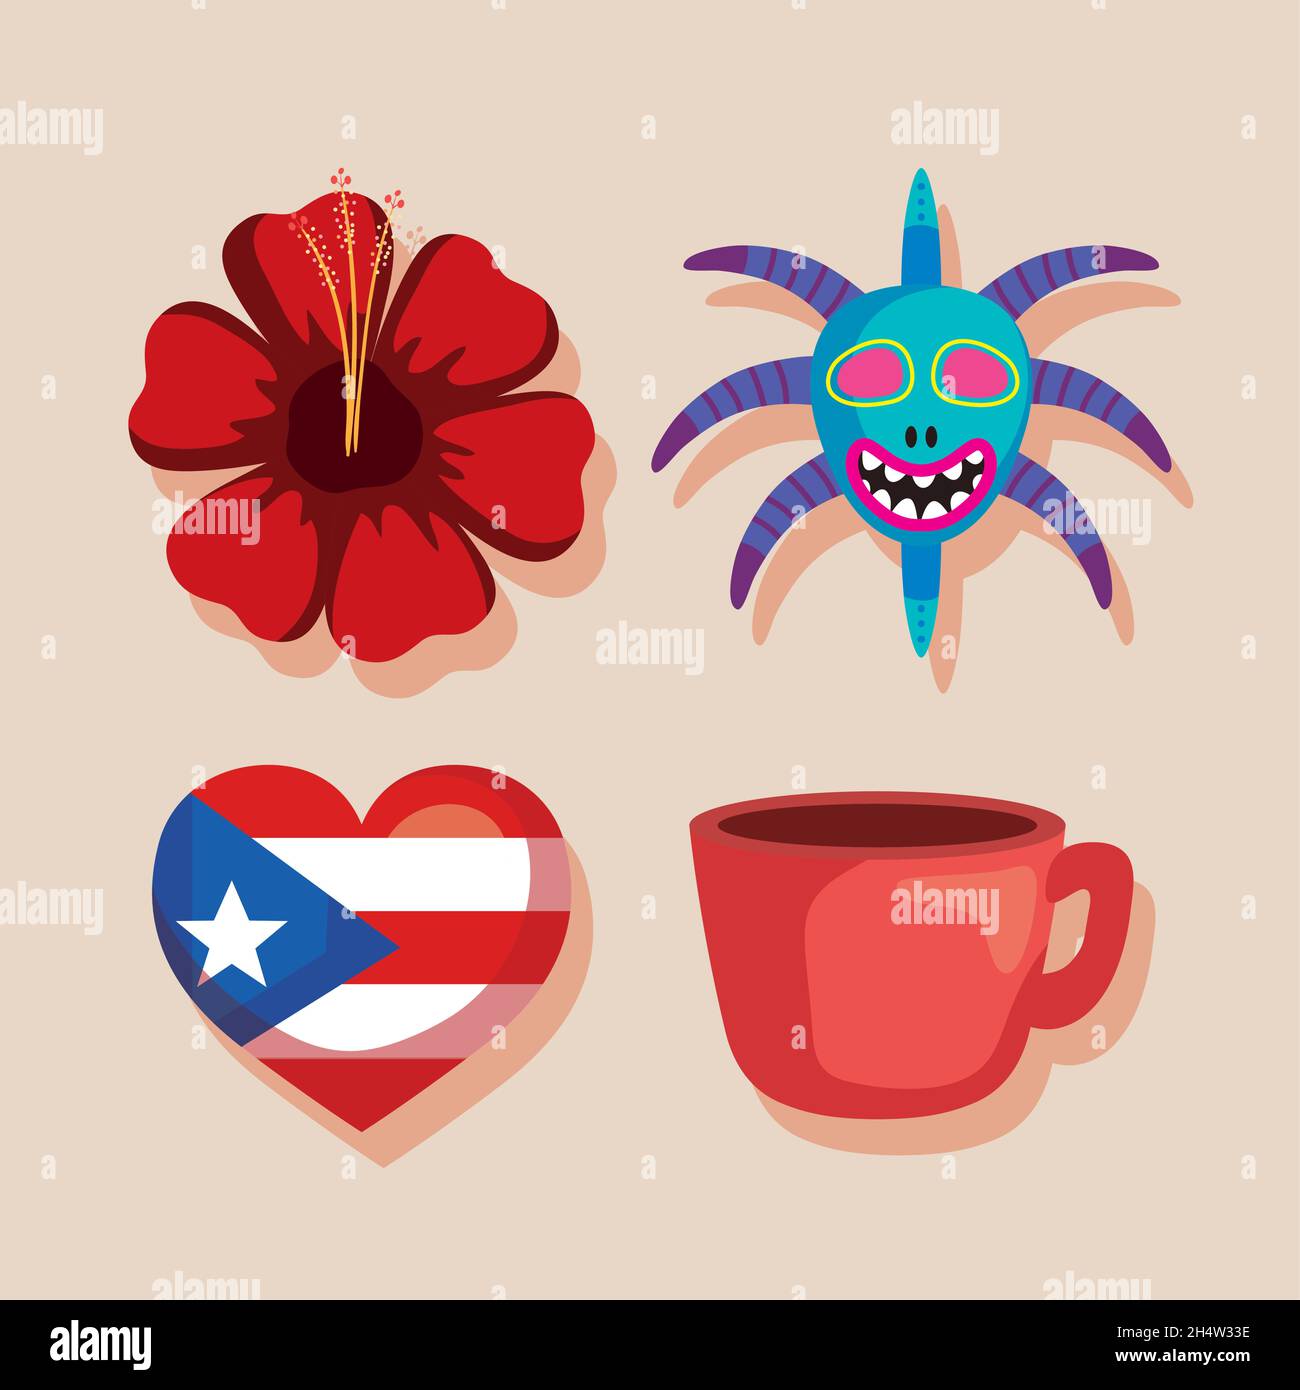 puerto rico culture icons Stock Vector